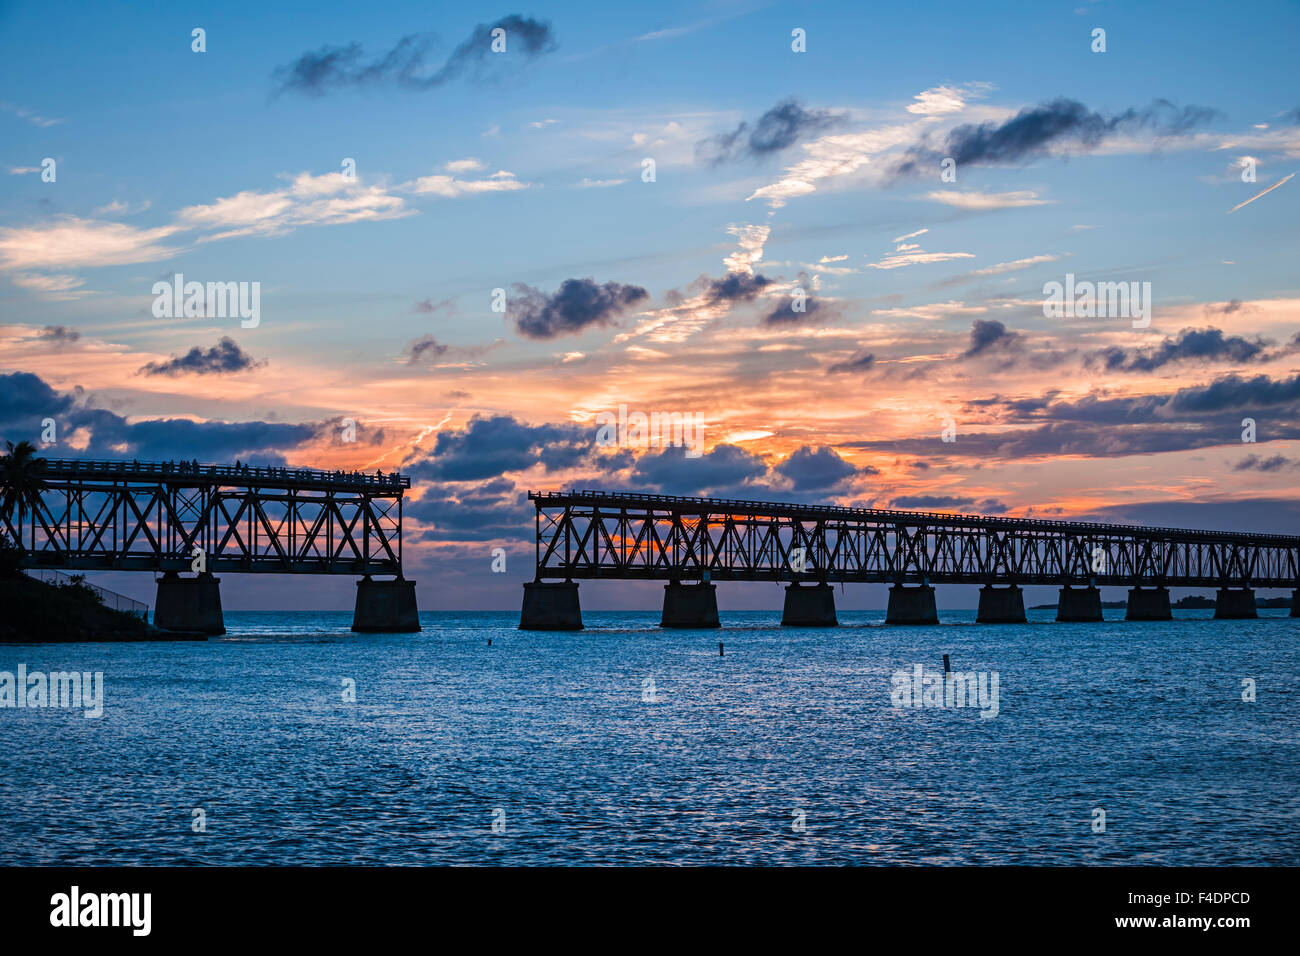 Sunset view of historic Rail Bridge at Bahia Honda state park in Florida Keys, USA. Stock Photo